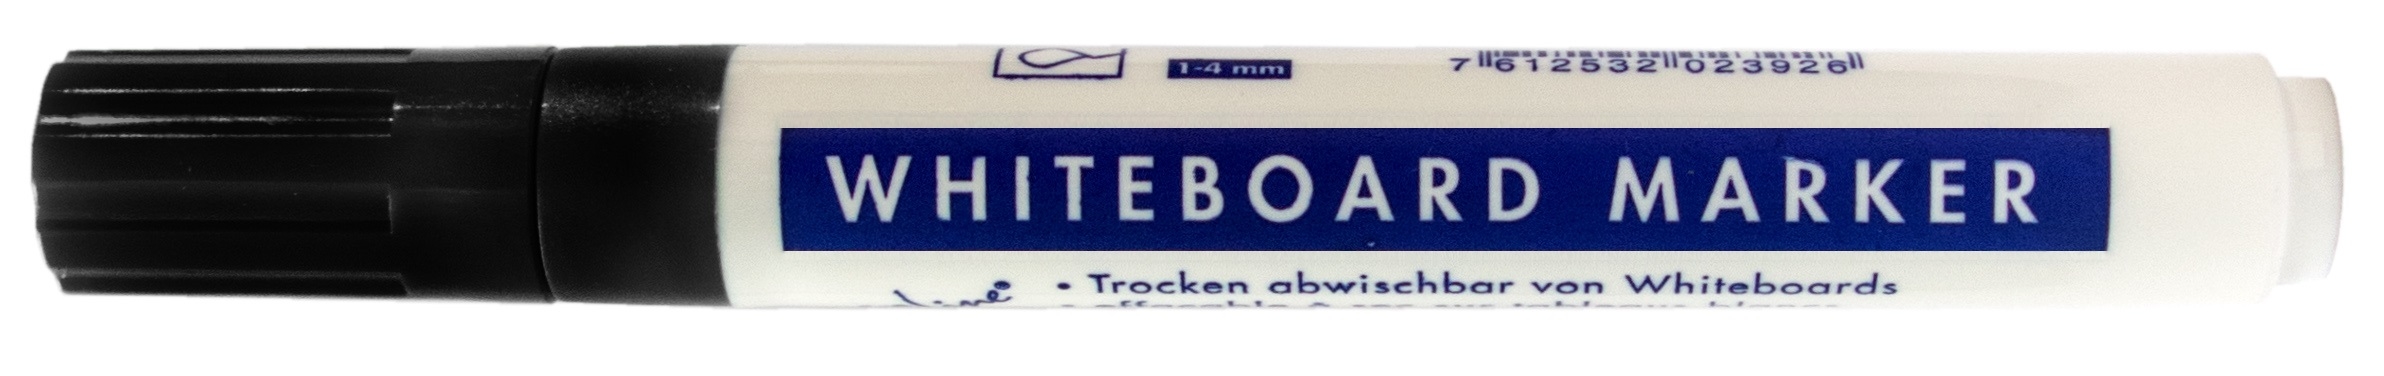 BÜROLINE Whiteboard Marker 1-4mm 223000 noir